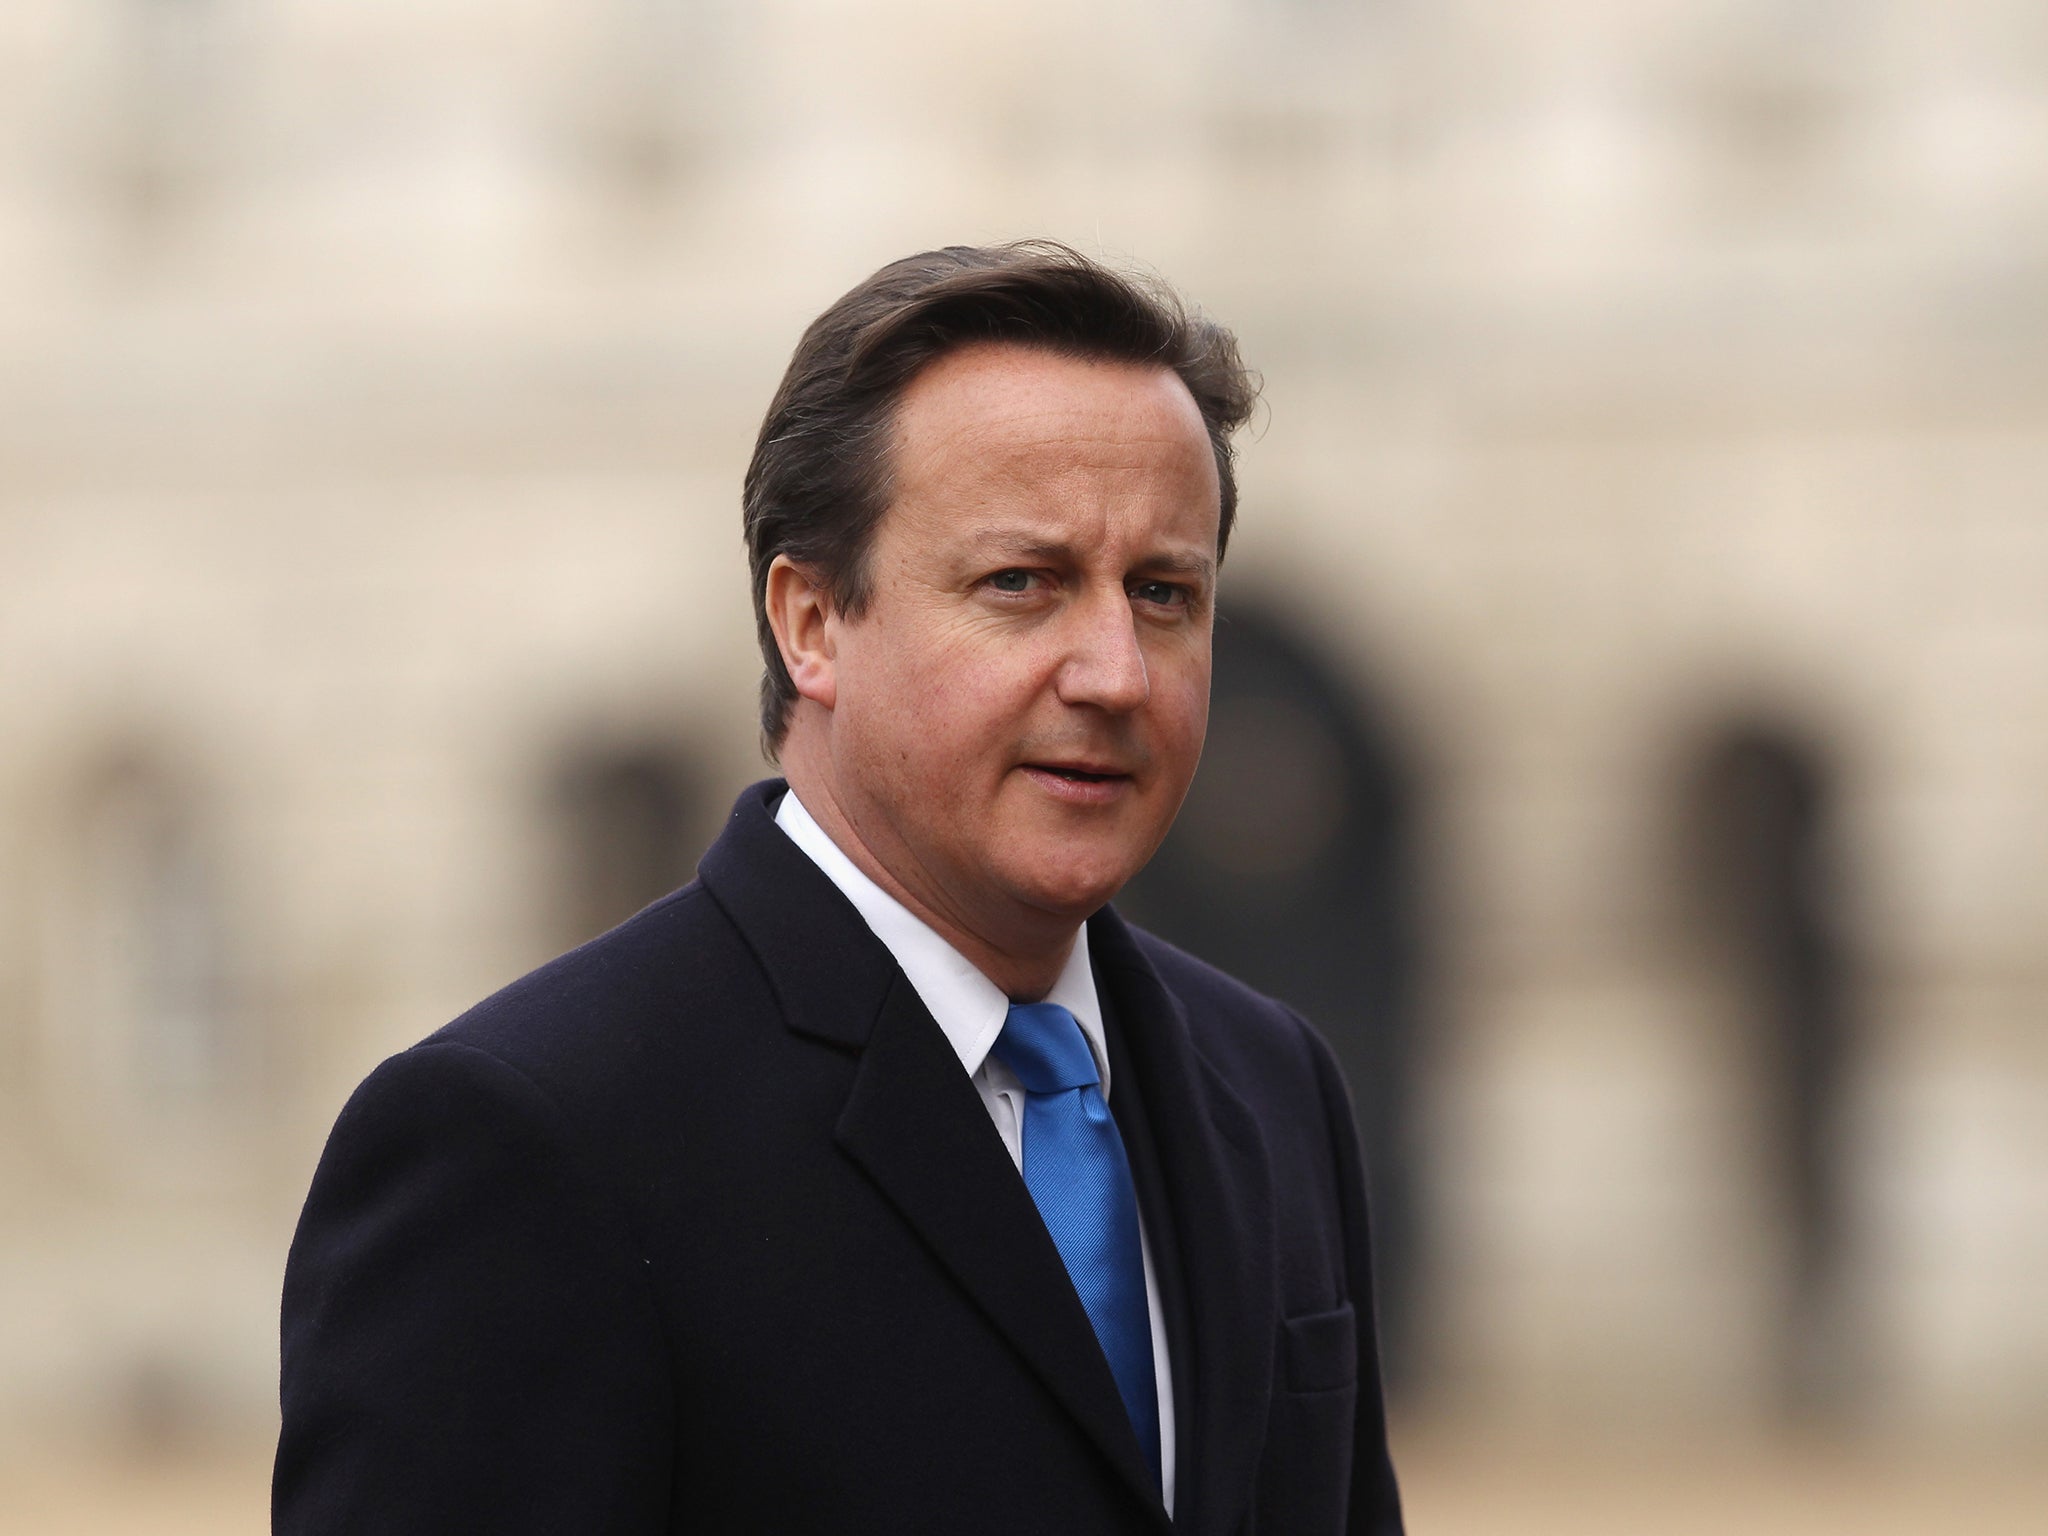 Cameron needs to adopt a more 'positive agenda', José Manuel Barroso said